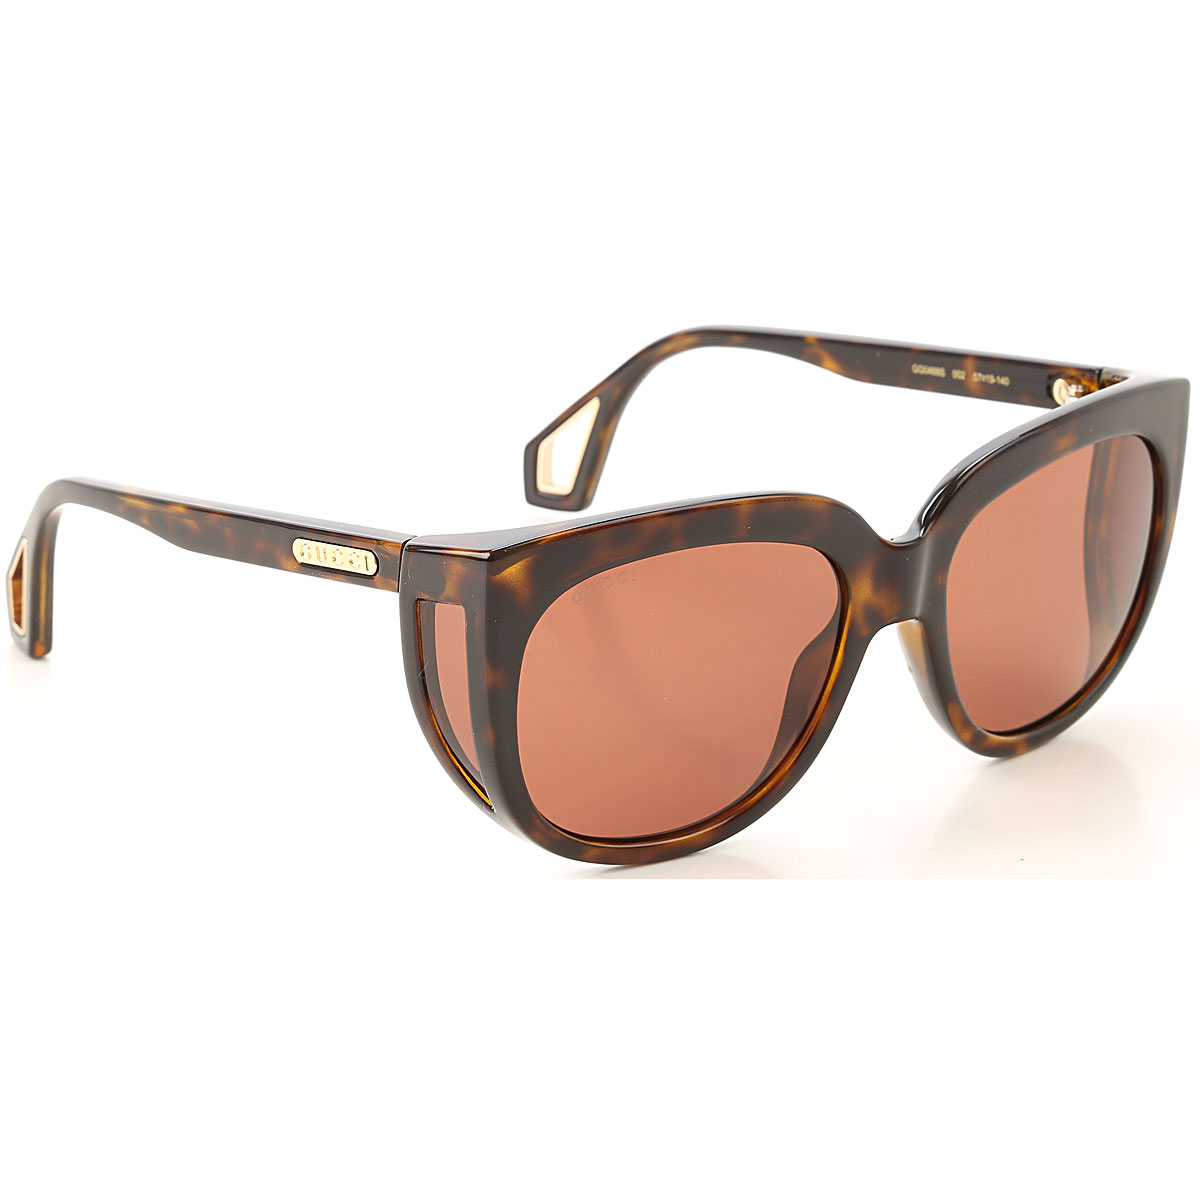 Sunglasses Gucci, Style code: gg0468s-002-N25